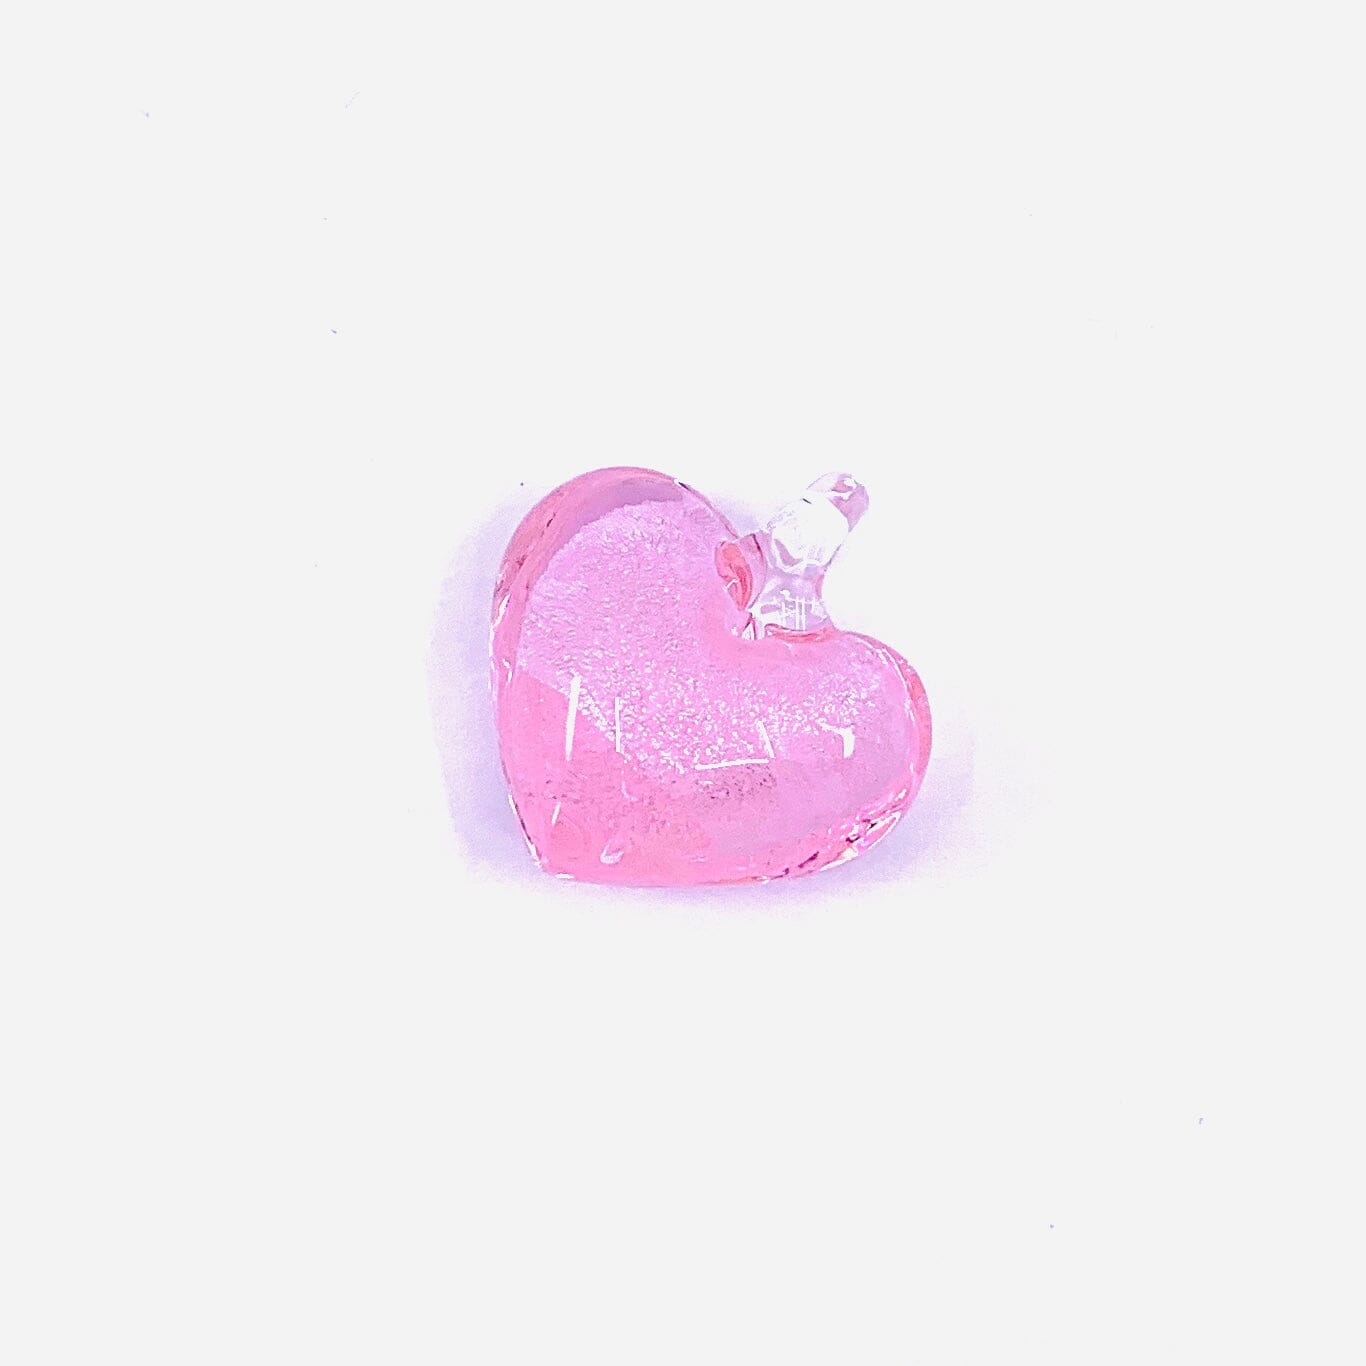 Glass Foil Hearts, Pink Miniature - 